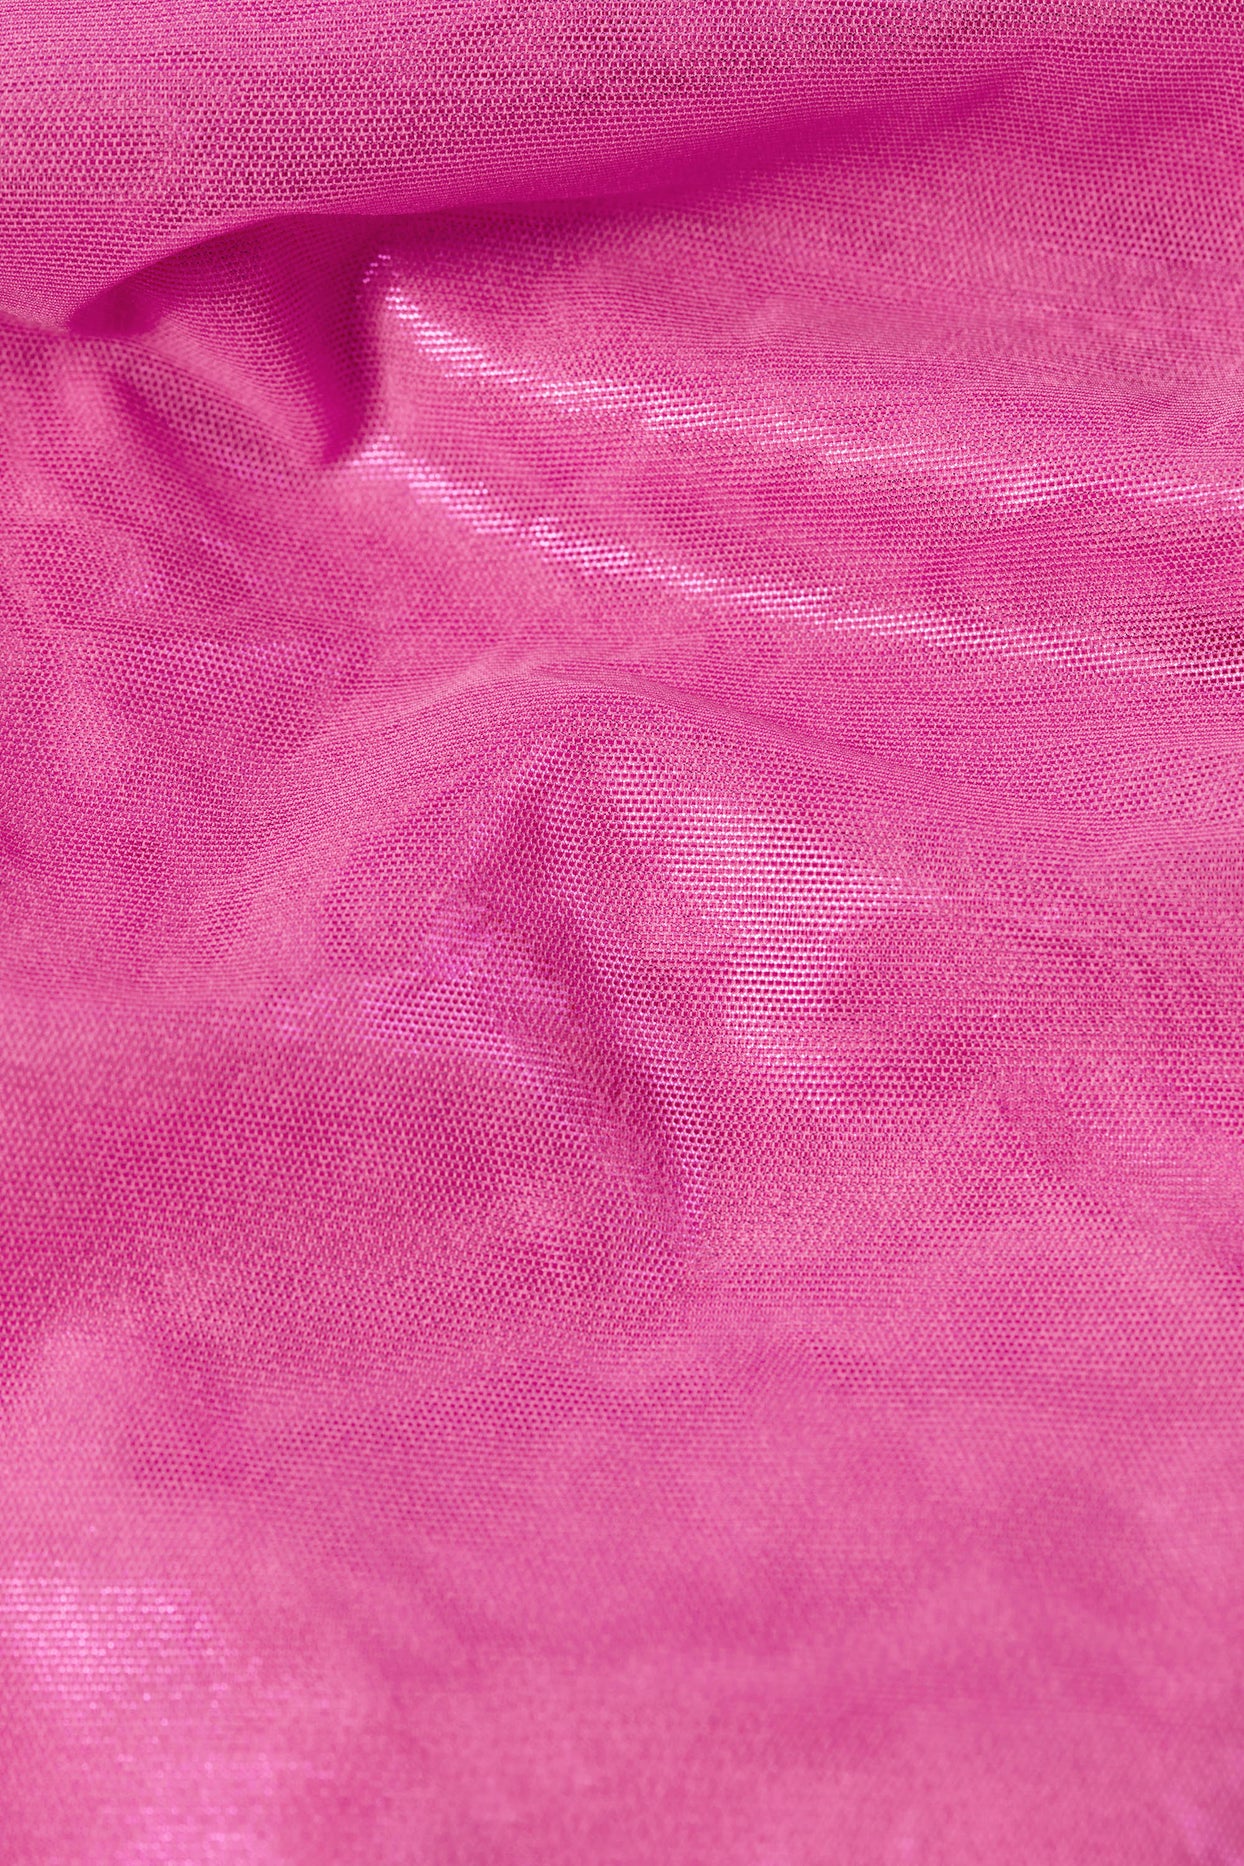 Metallic Ruffle Low-Rise Flared Trousers in Bubblegum Pink